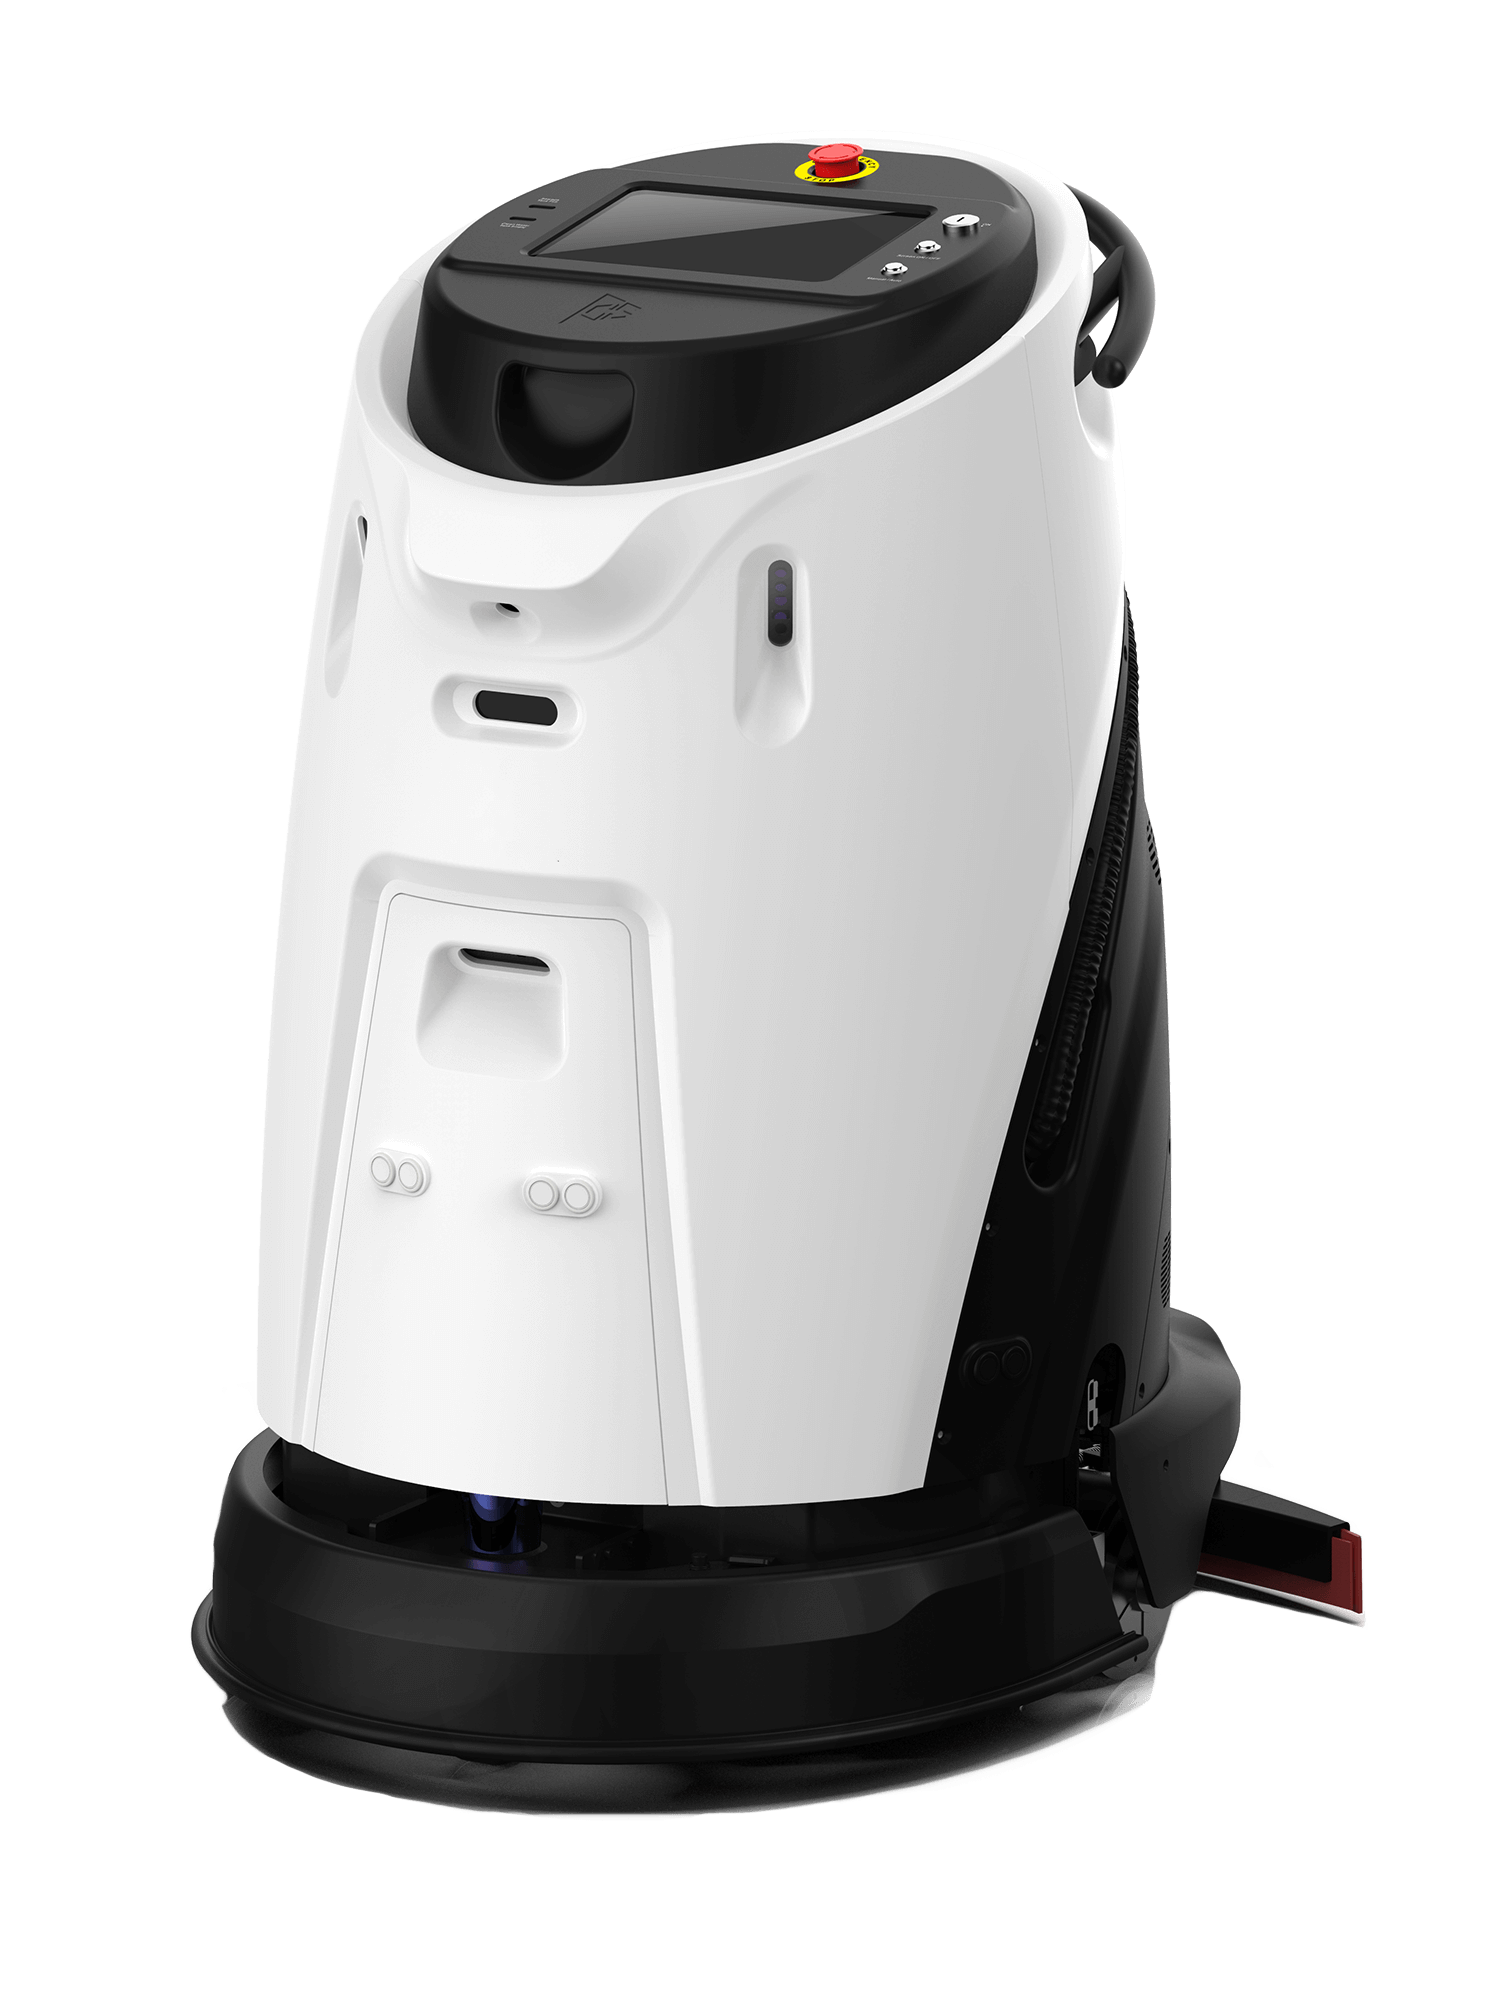 Scrubber 50 Pro cleaning robot wet vacuum cleaner automatically autonomous